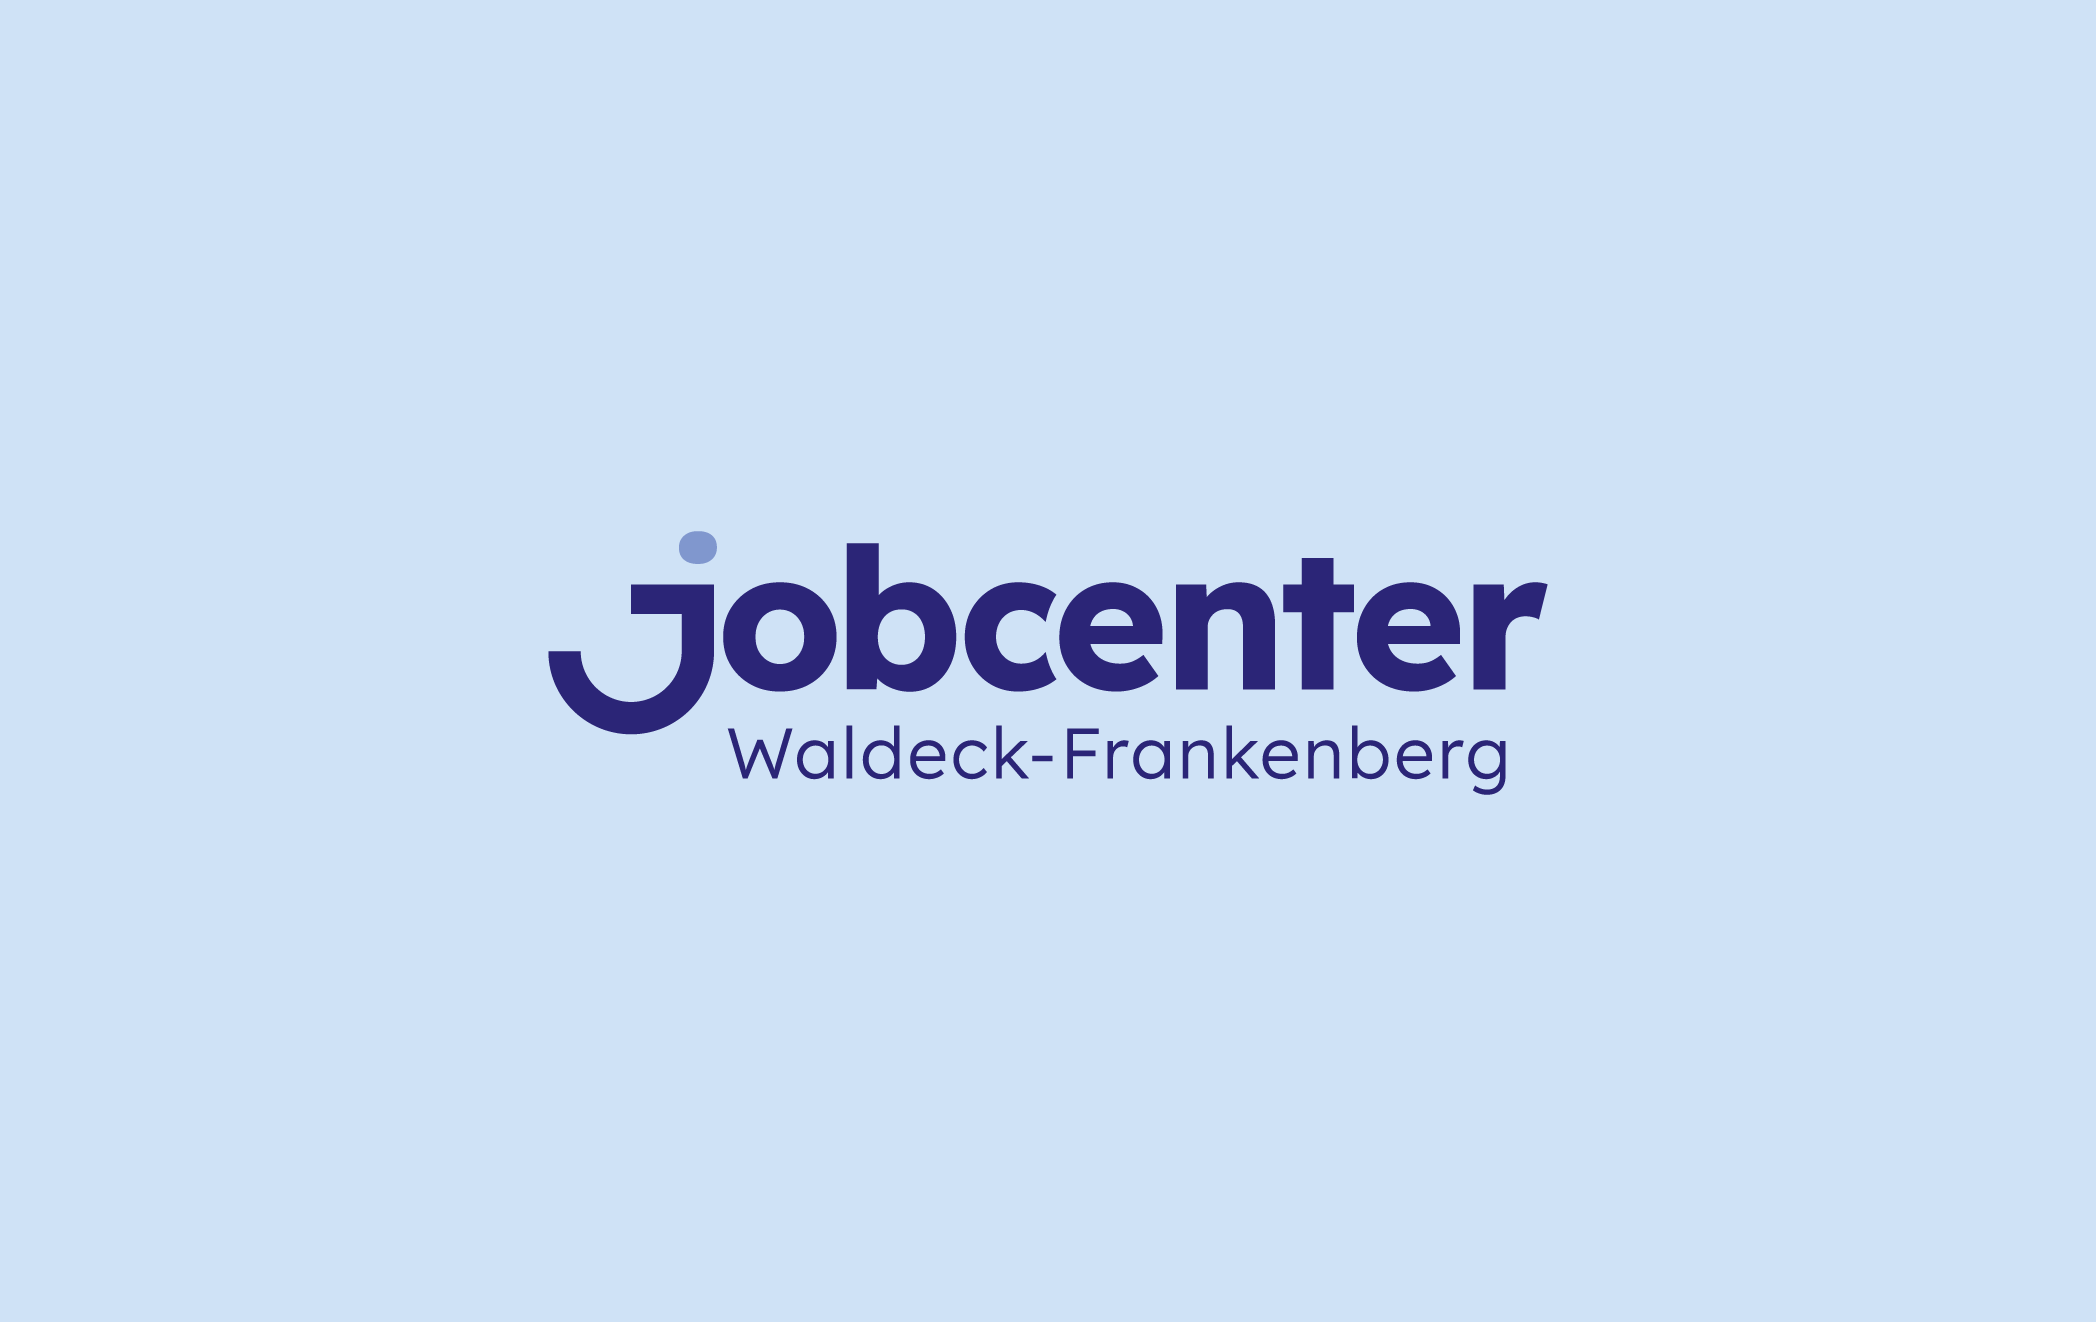 Jobcenter Waldeck-Frankenberg, Branding